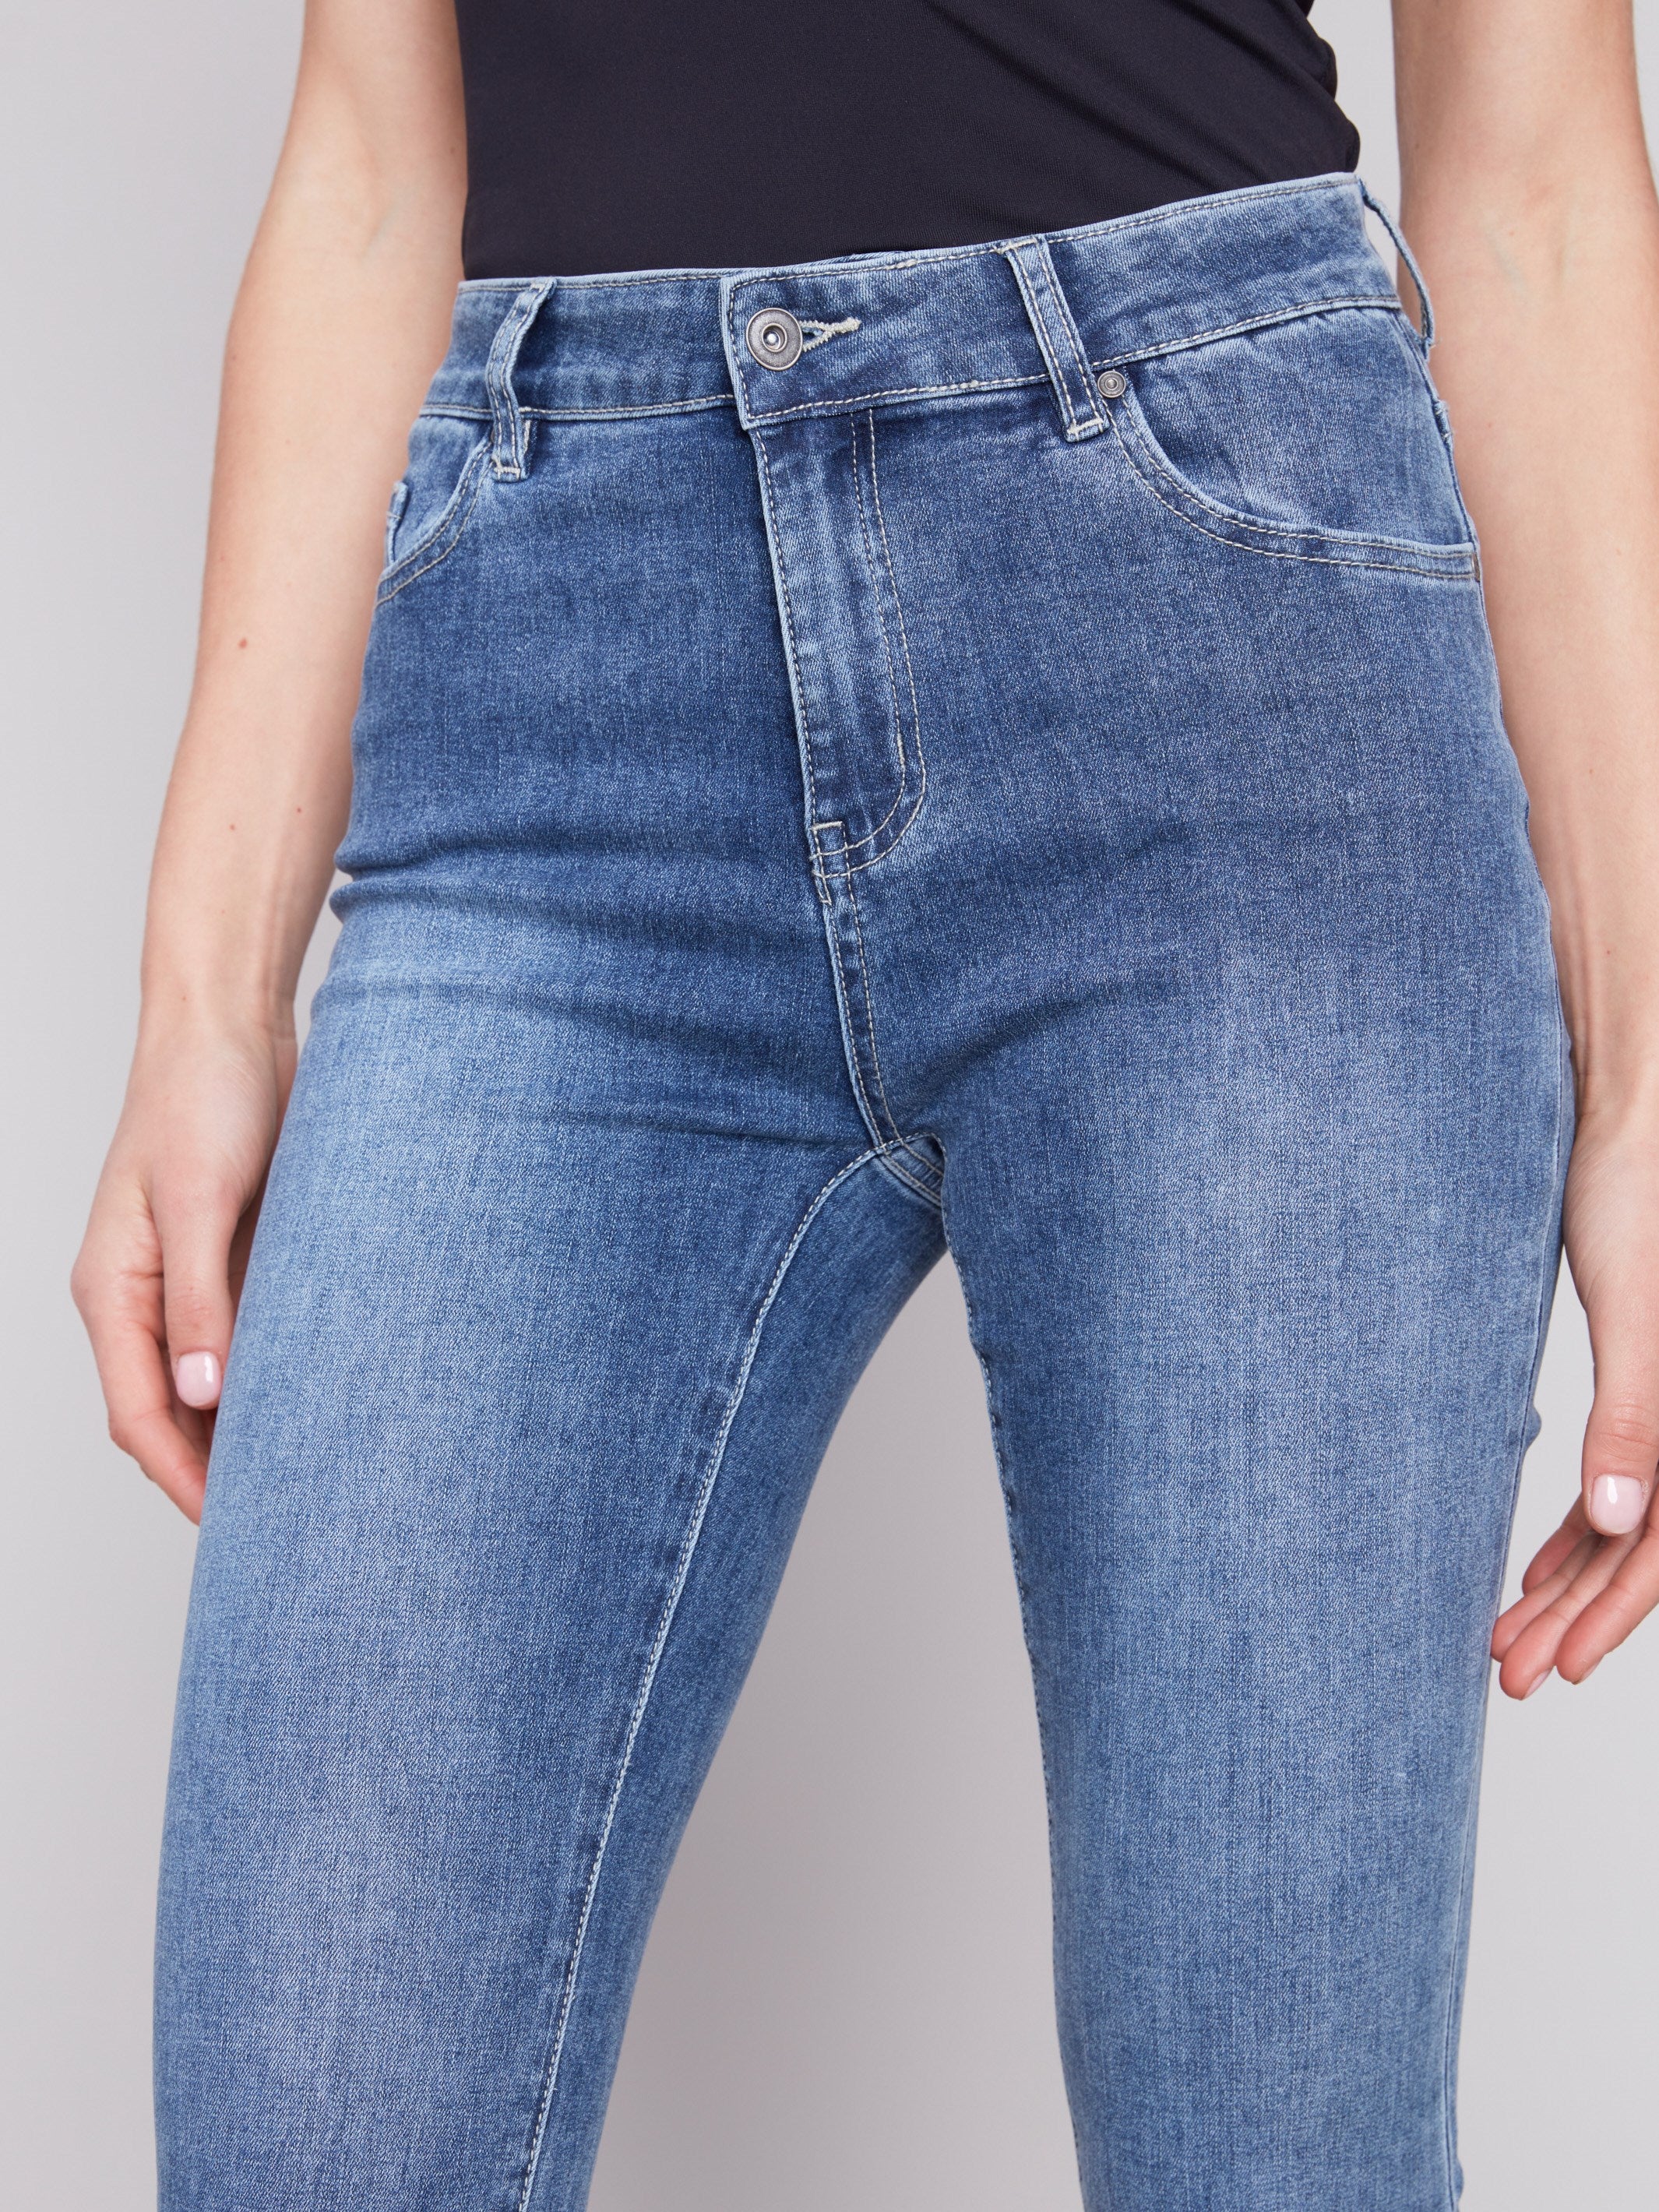 Charlie B Cropped Bootcut Jeans with Asymmetrical Hem - Medium Blue - Image 5